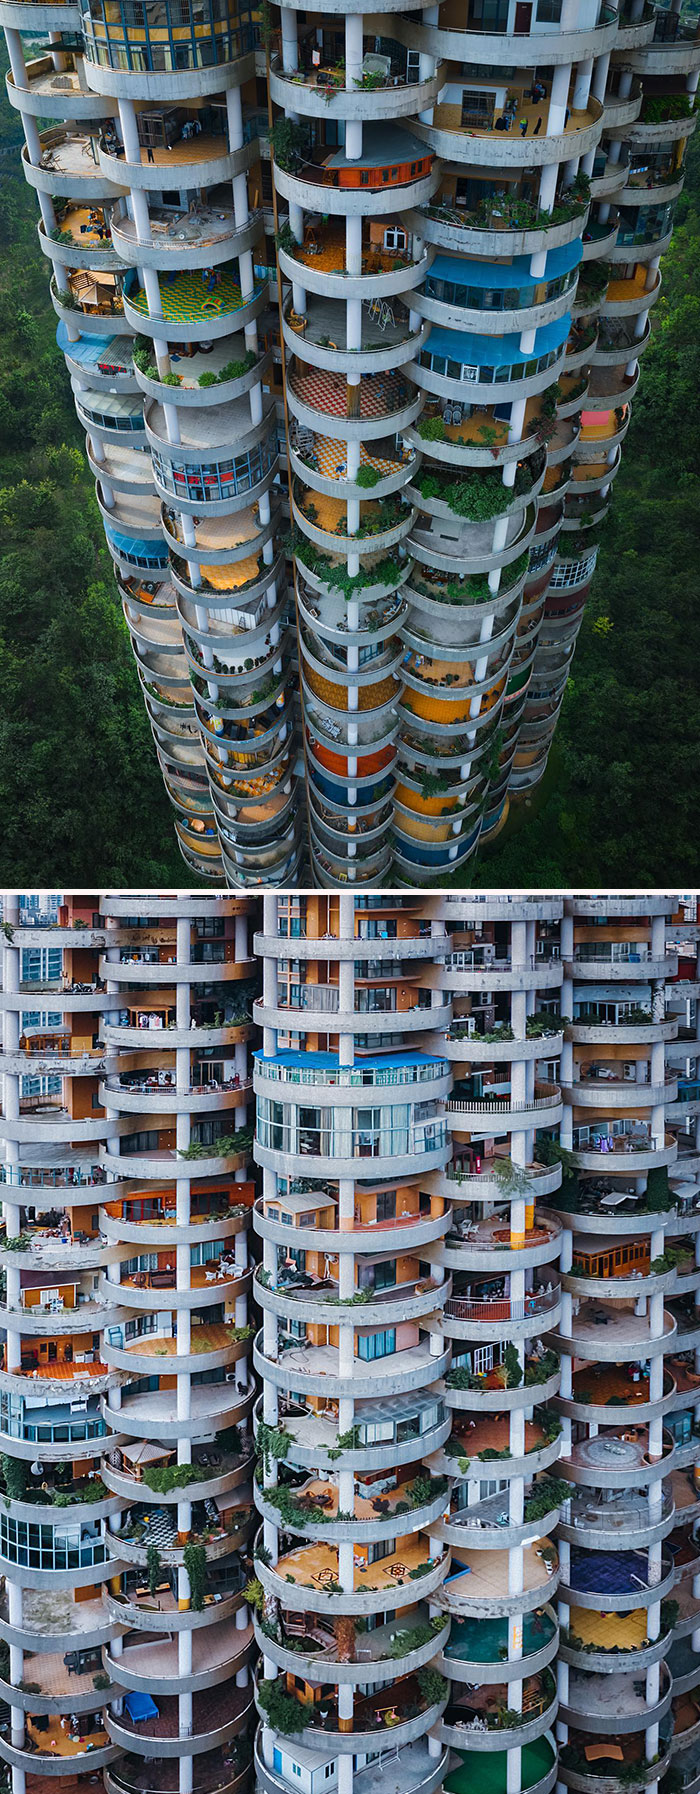 These Balconies In Guiyang, China